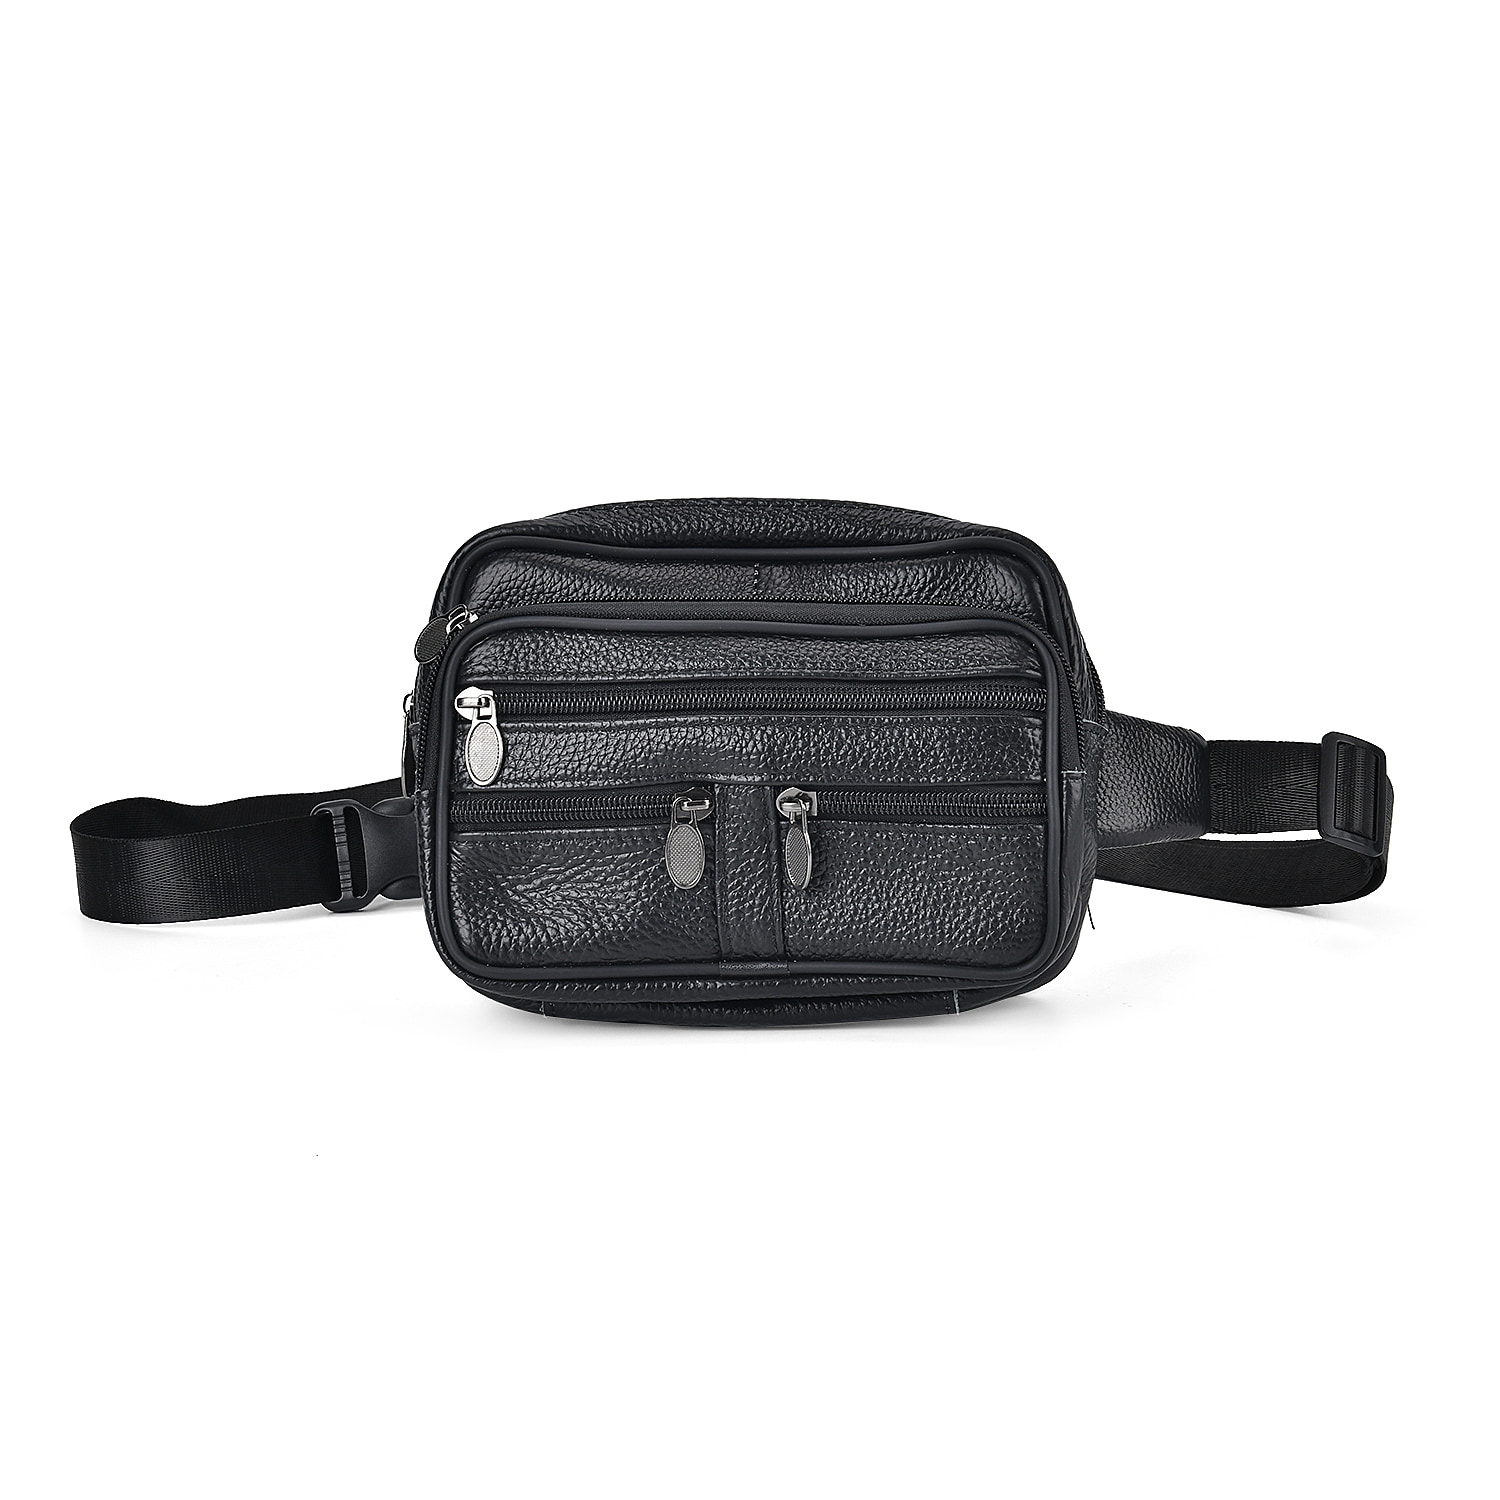 Leather-Weave-Crossbody-Bag-Size-18x8x13-cm-Black-Black